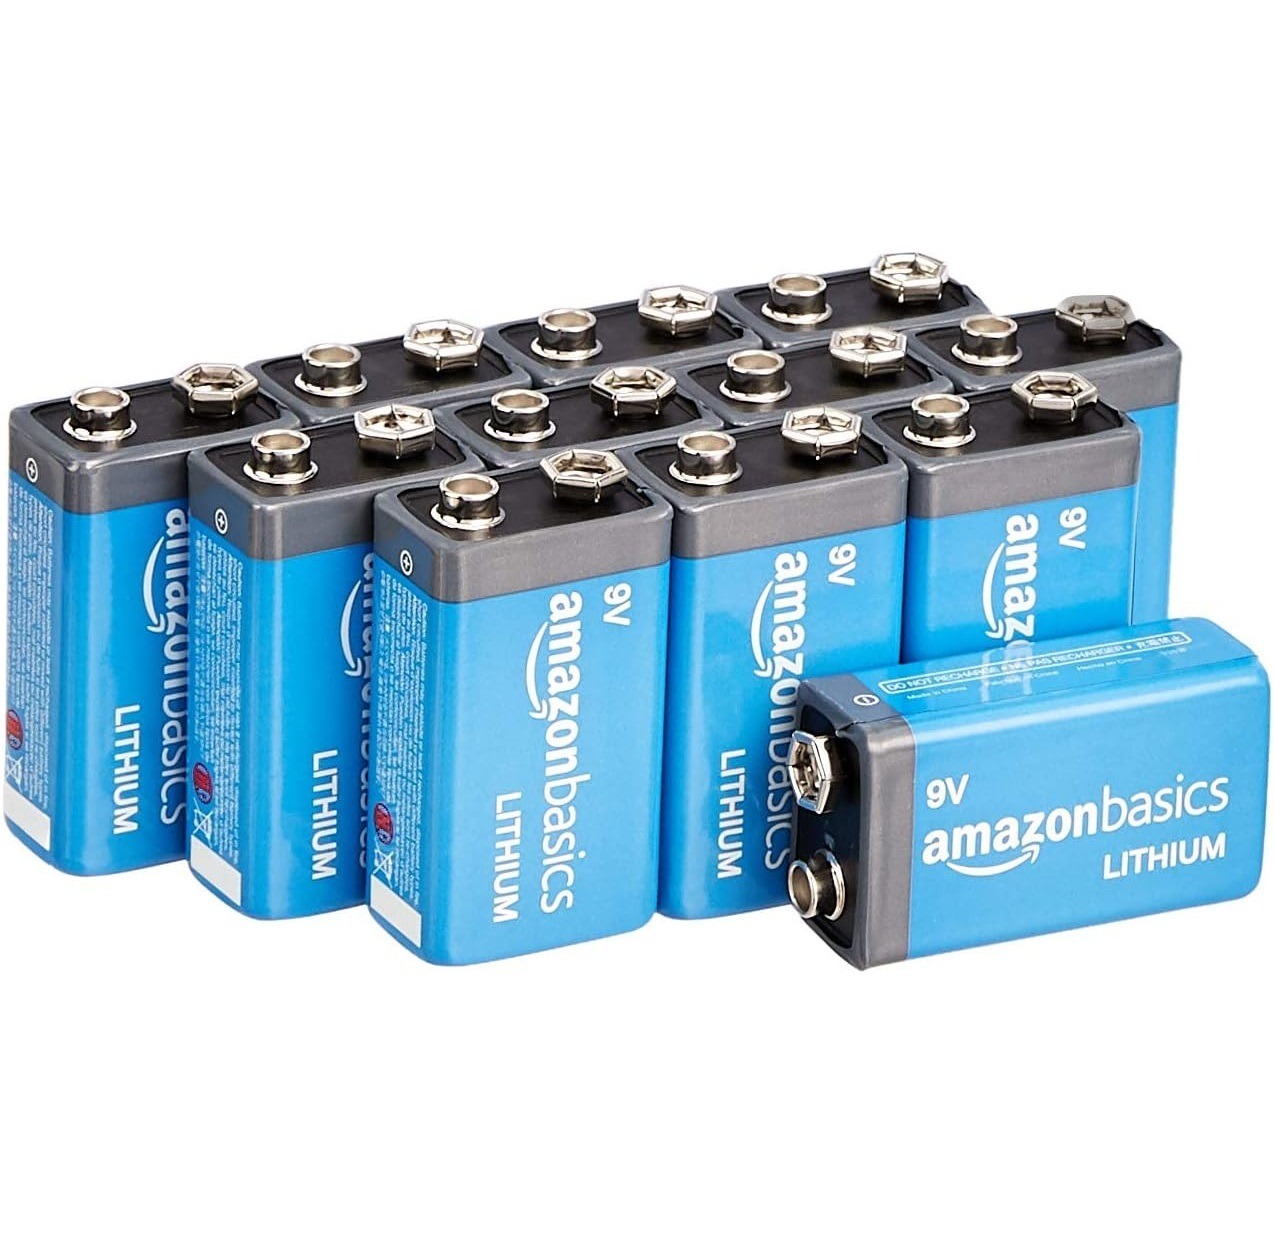 Amazon Basics 12-Pack 9 Volt Lithium High-Performance Batteries w/ 10-Year Shelf Life $22 + Free Shipping